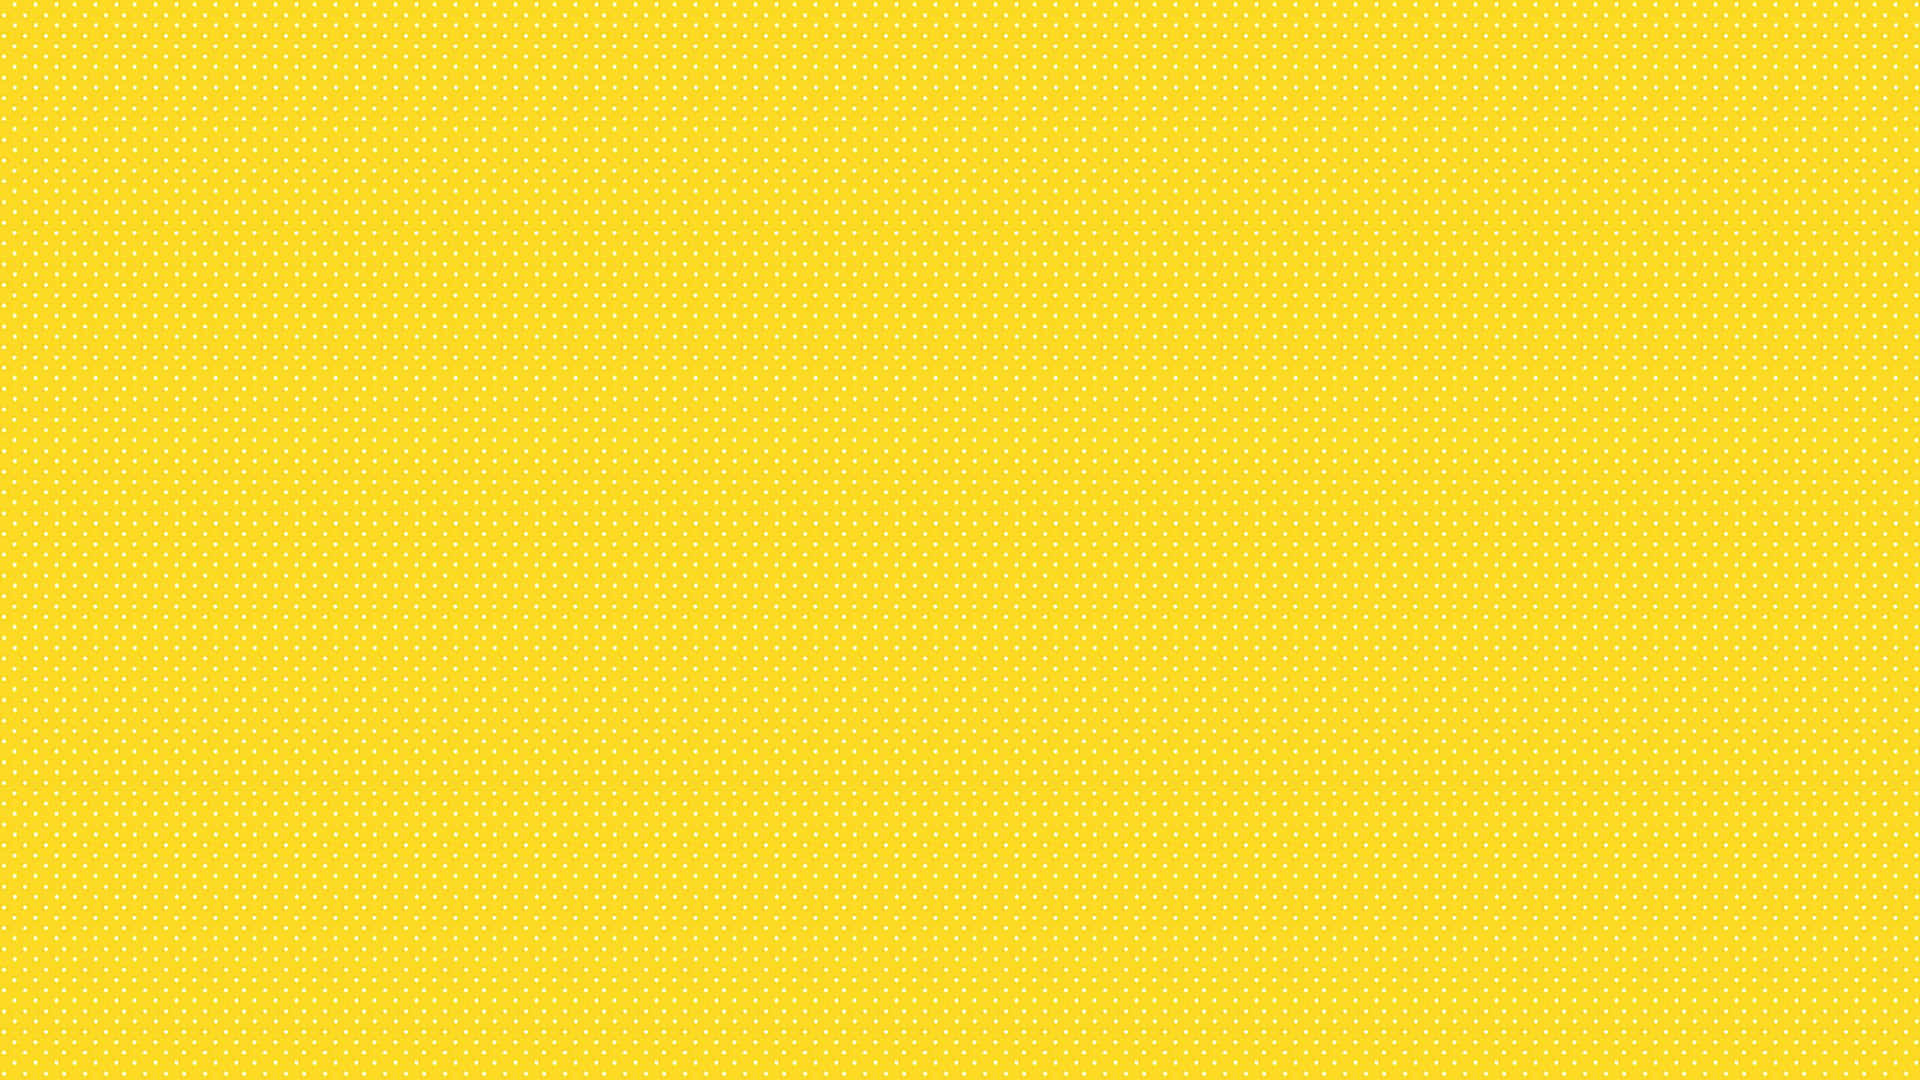 Bold Simplicity - Plain Yellow Background